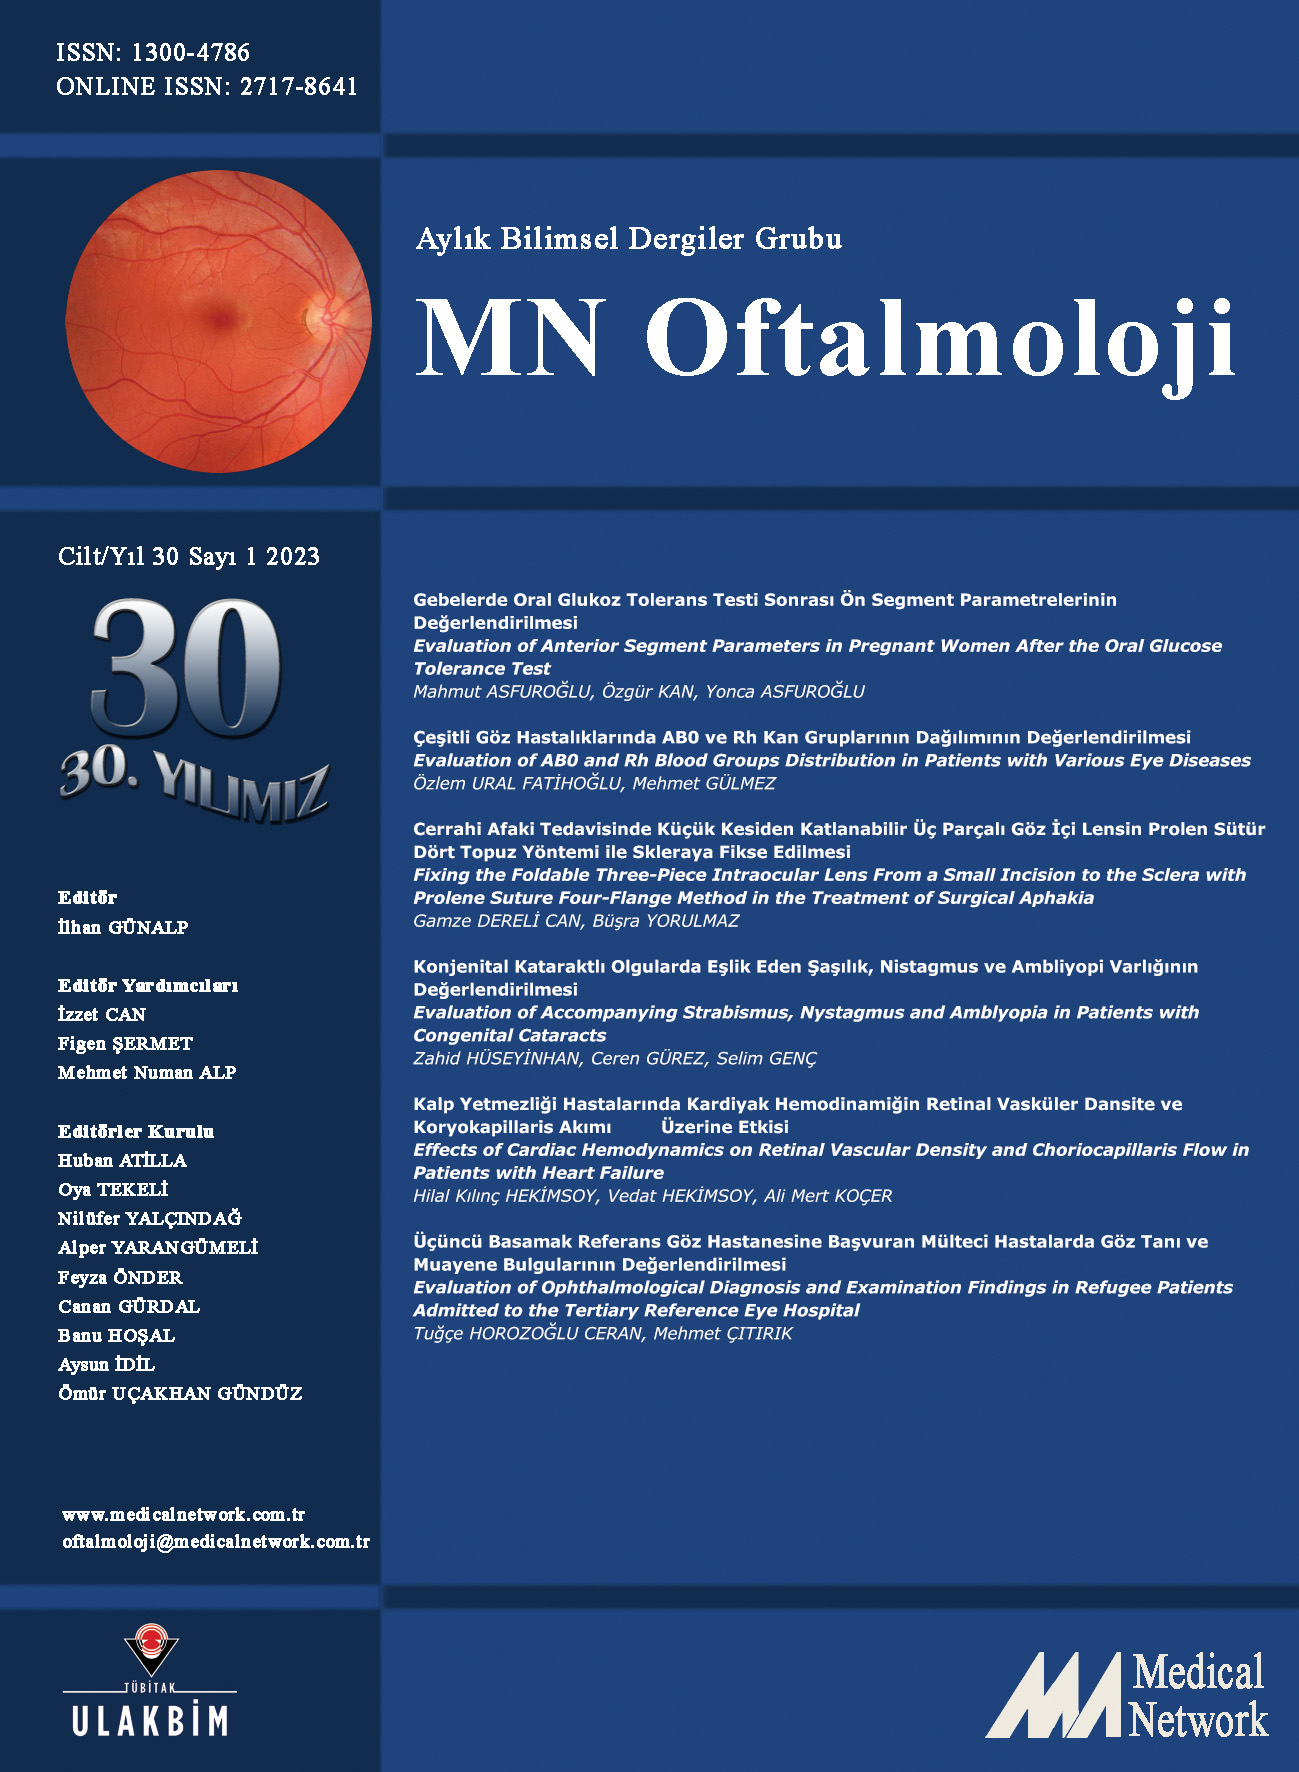 <p>MN Oftalmoloji Cilt: 30 Say: 1 2023 (MN Ophthalmology Volume: 30 No: 1 2023)</p>